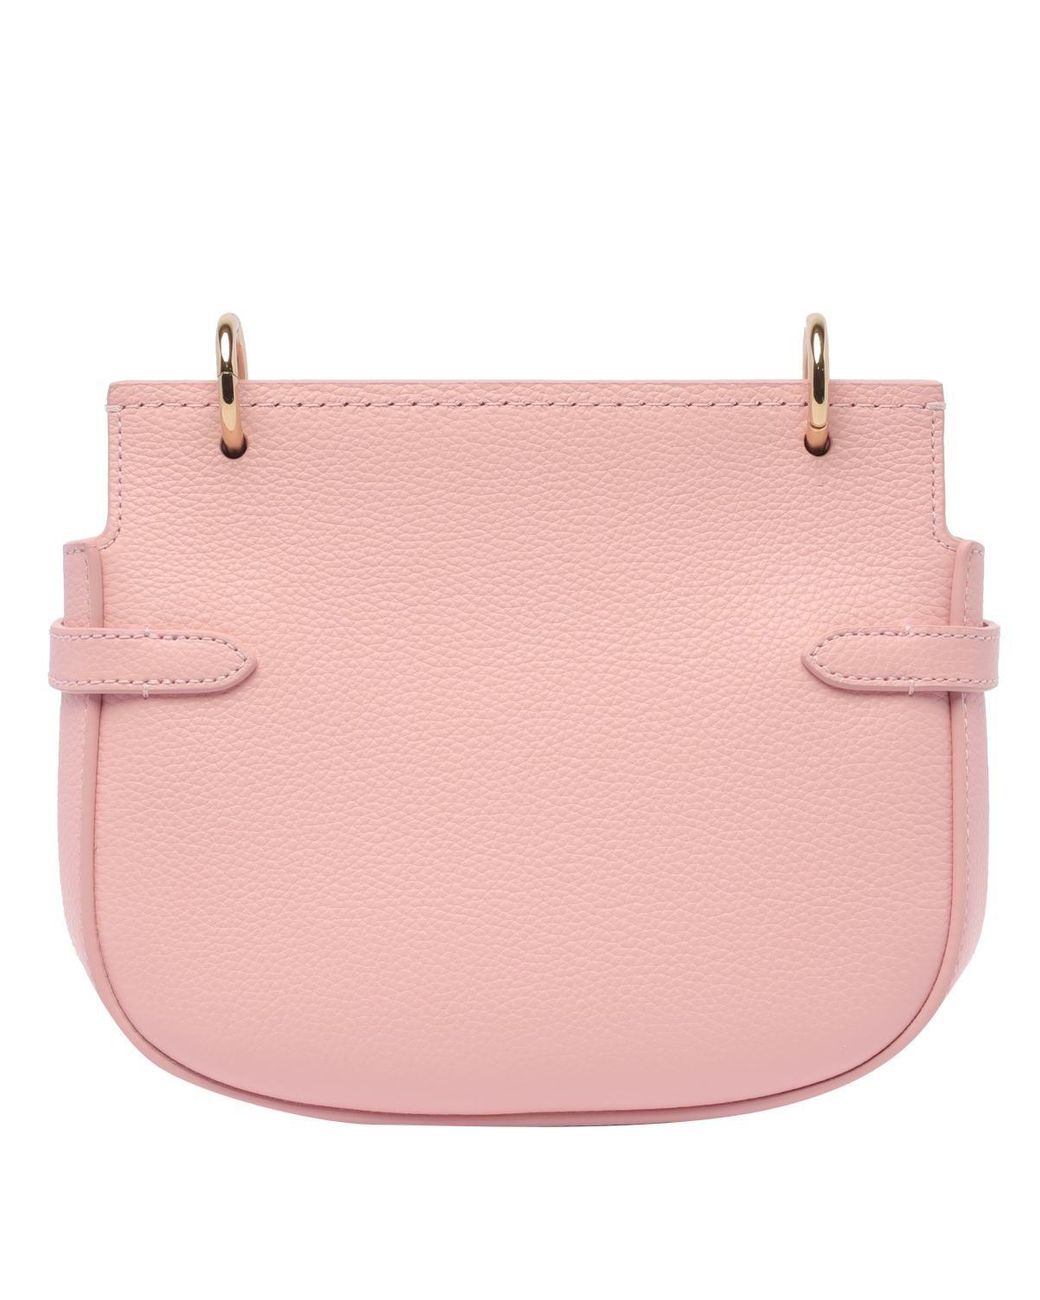 Mulberry Handbag - Pink | Editorialist